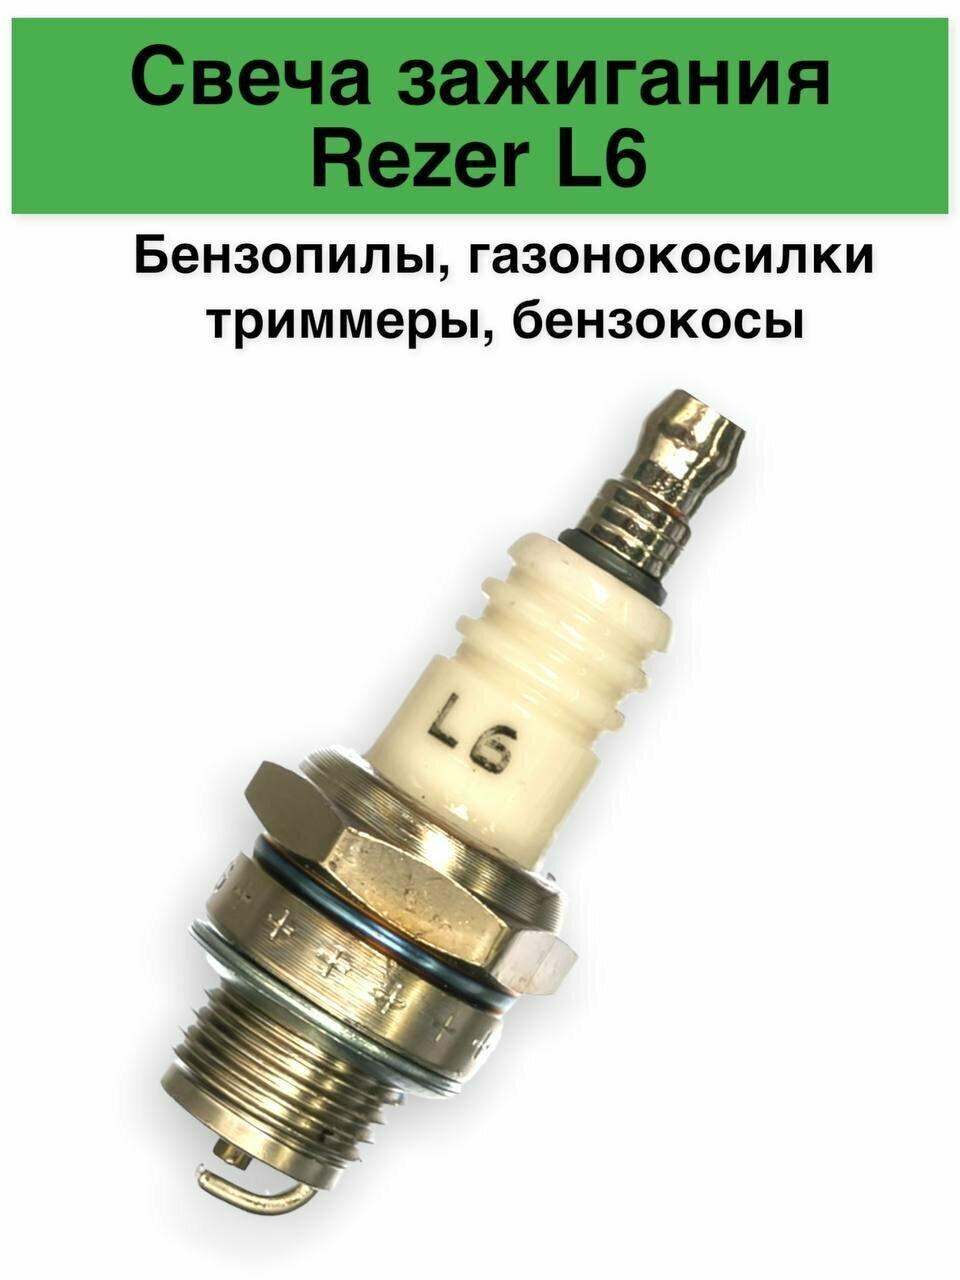 Свеча зажигания L6 аналог L7T для бензопил, триммеров, бензокосилок, газонокосилок.